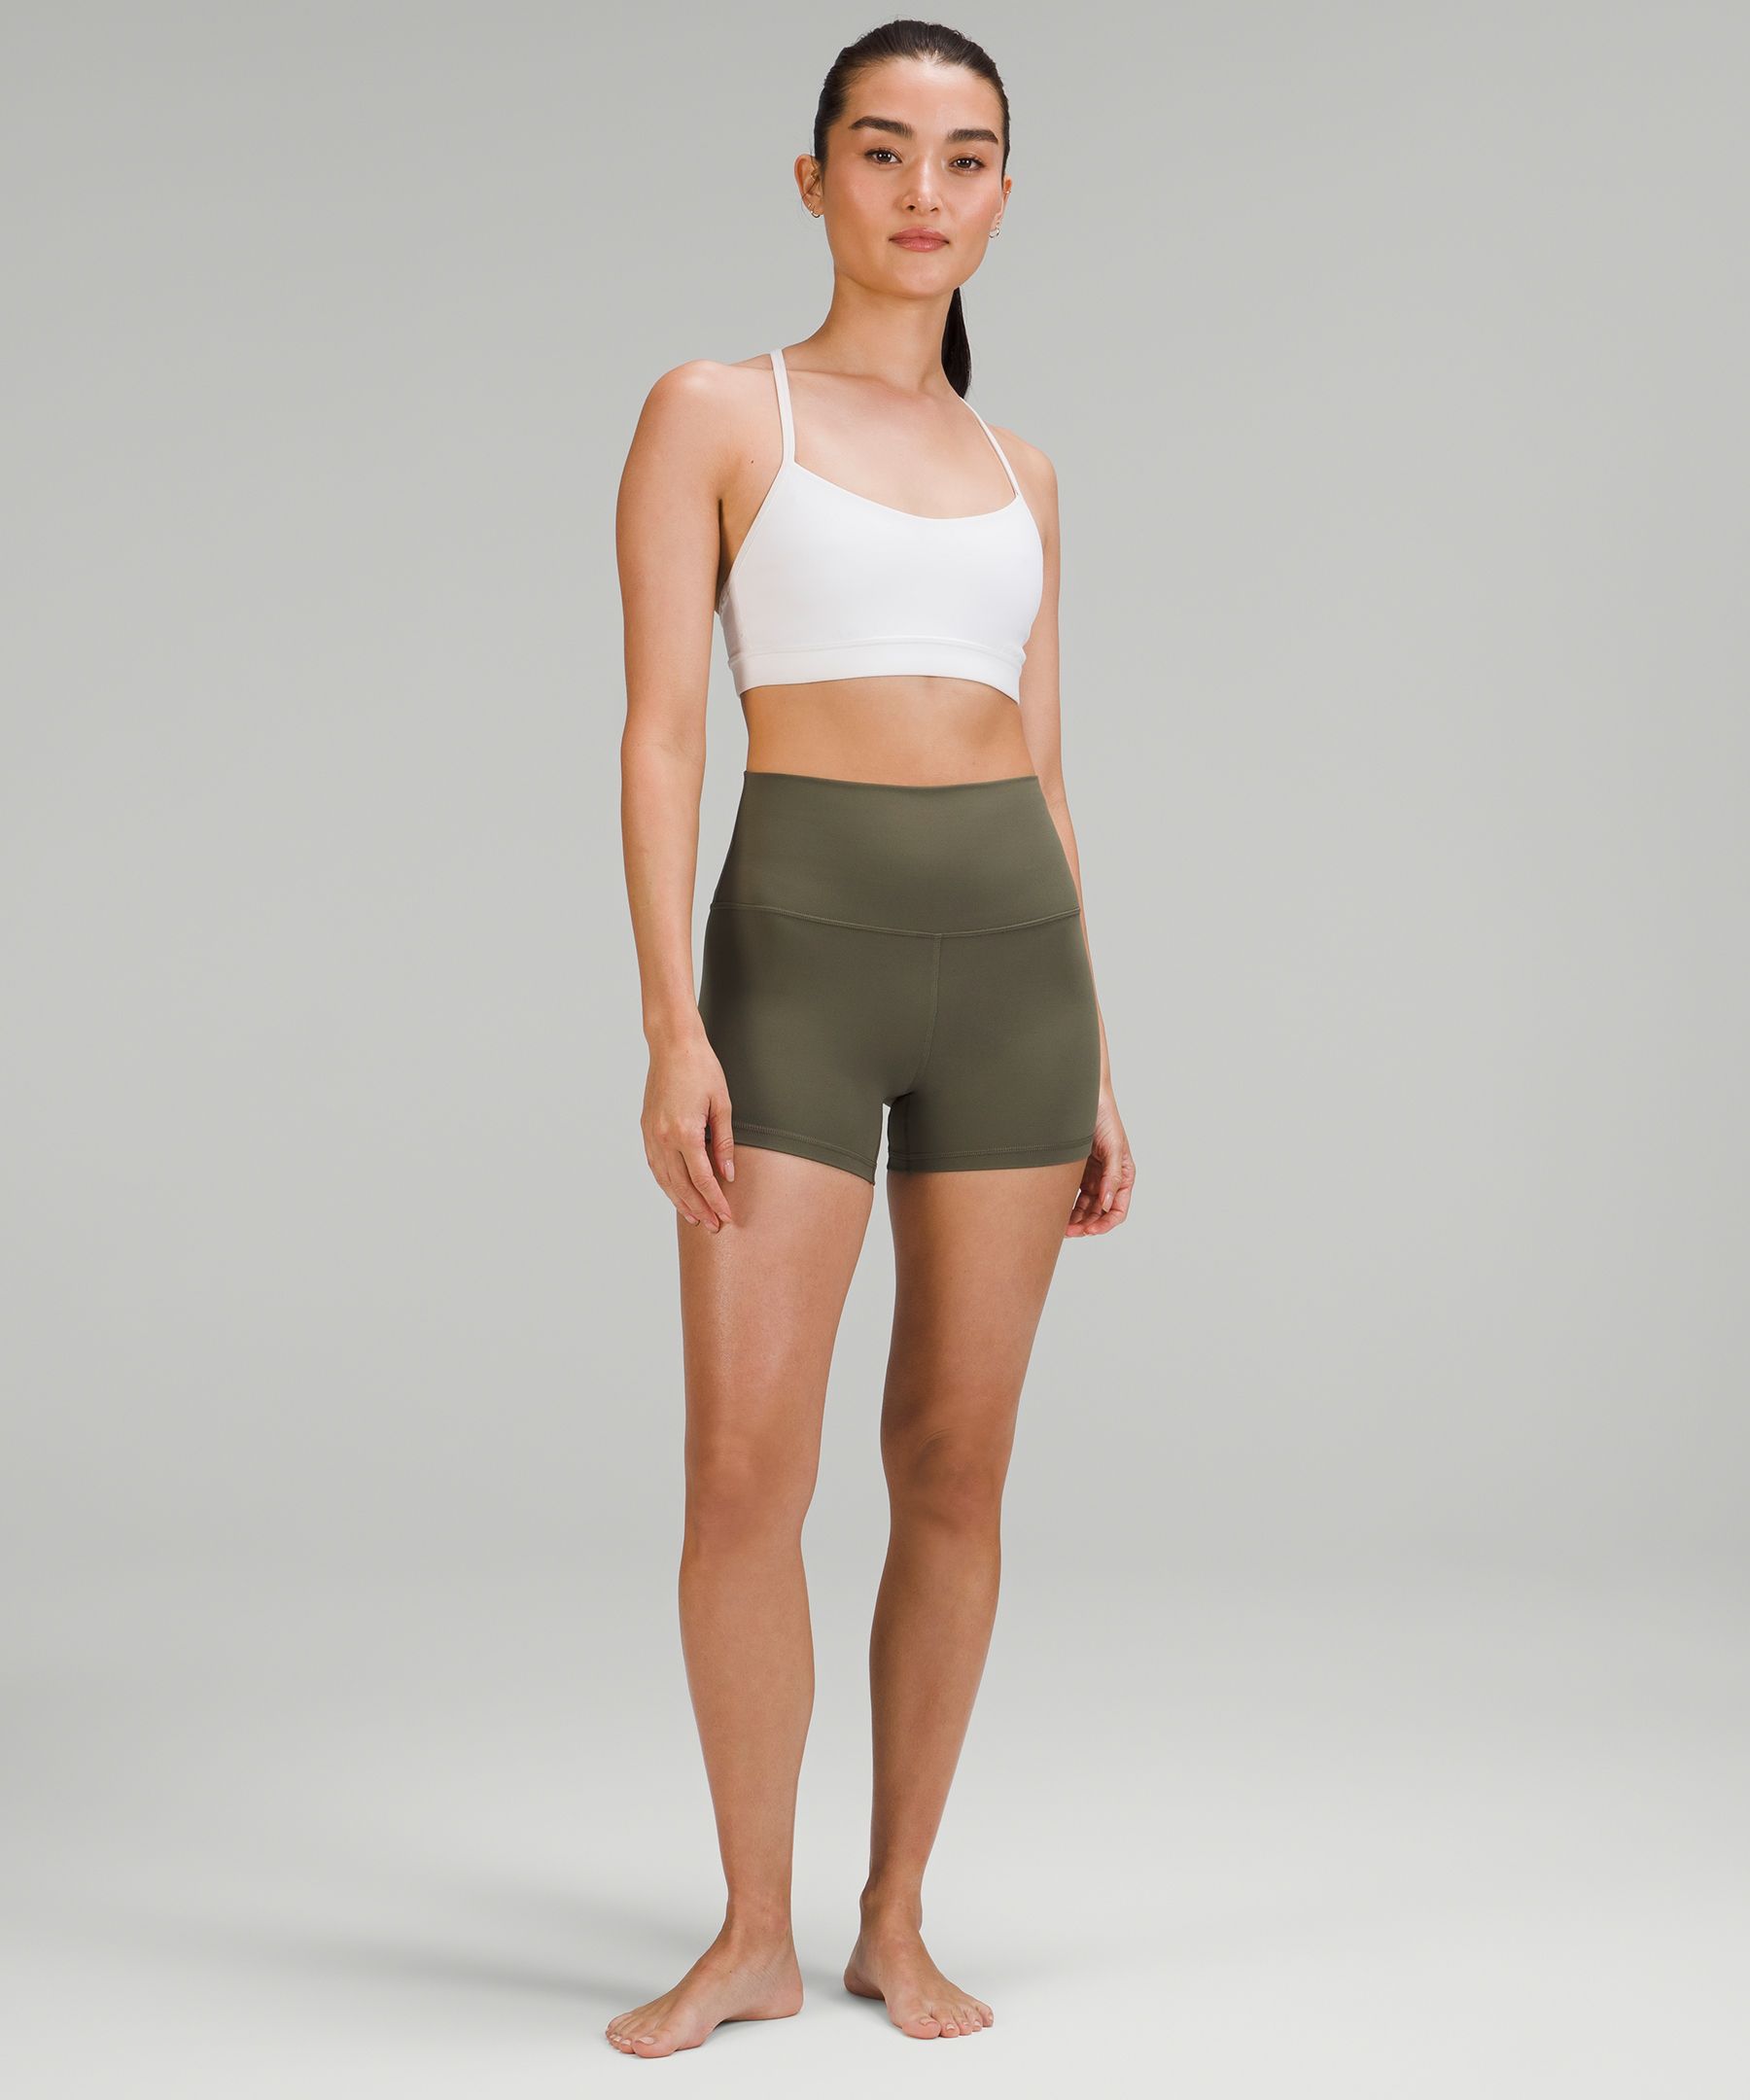 Kelly Green Lululemon Shorts - Gem